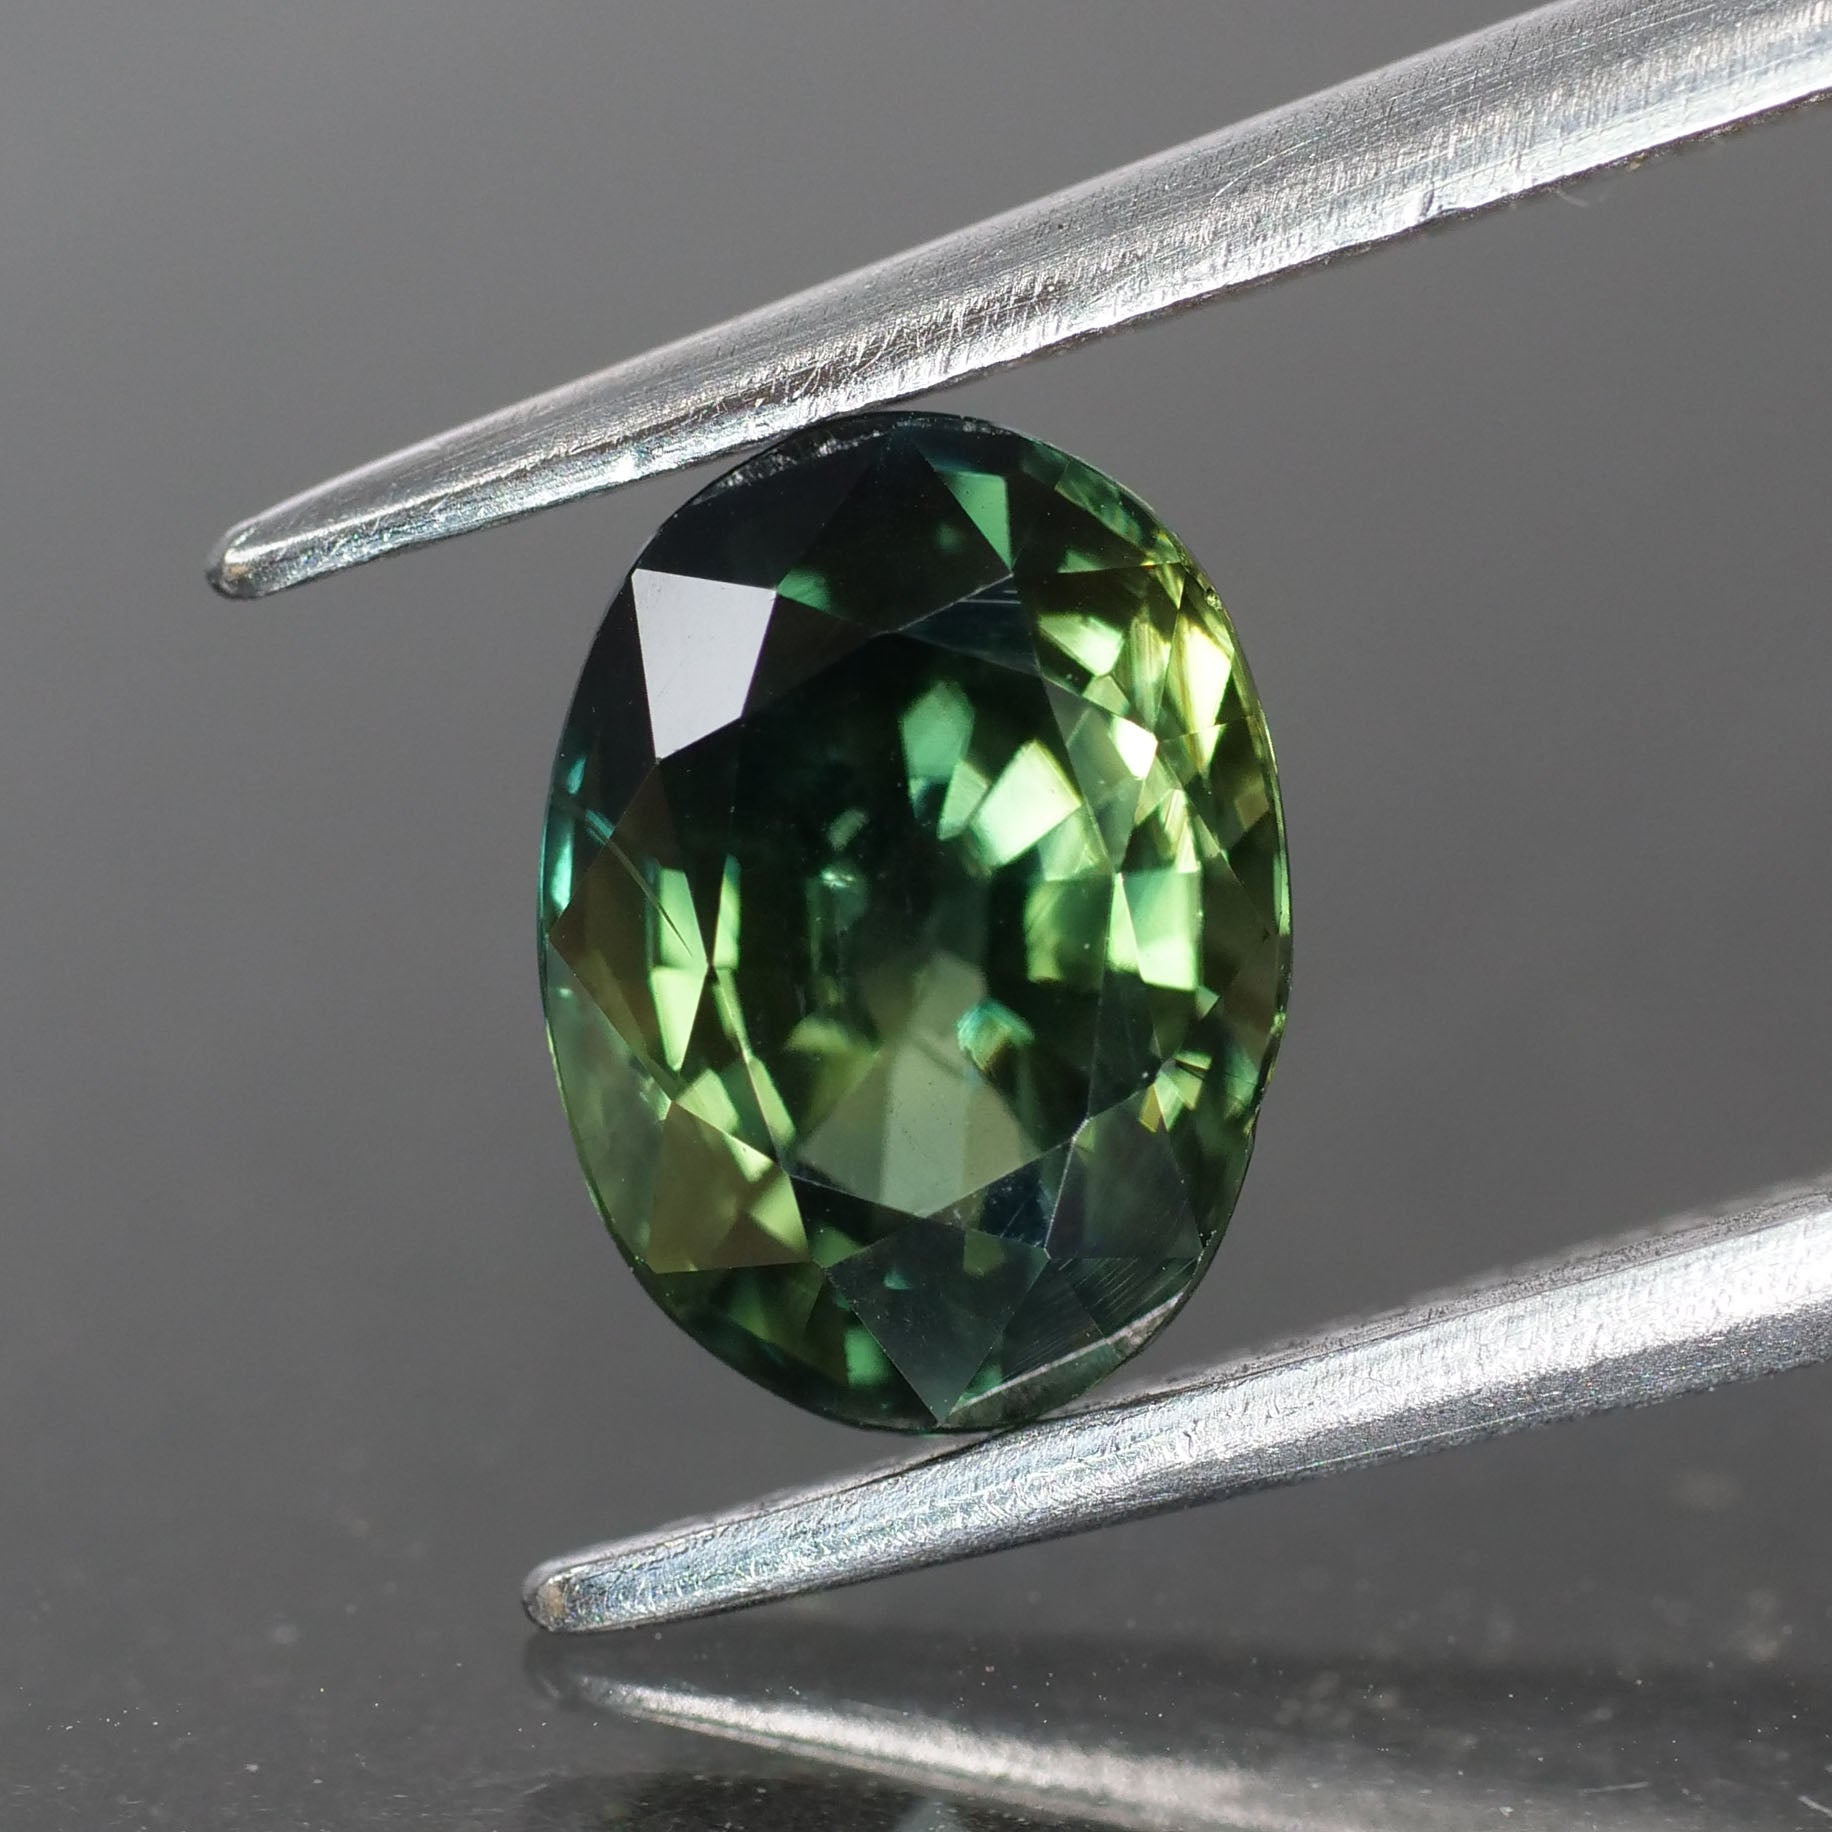 Sapphire | IGI certified  natural, green, oval cut 8x6 mm, VS, 1.55 ct - Eden Garden Jewelry™